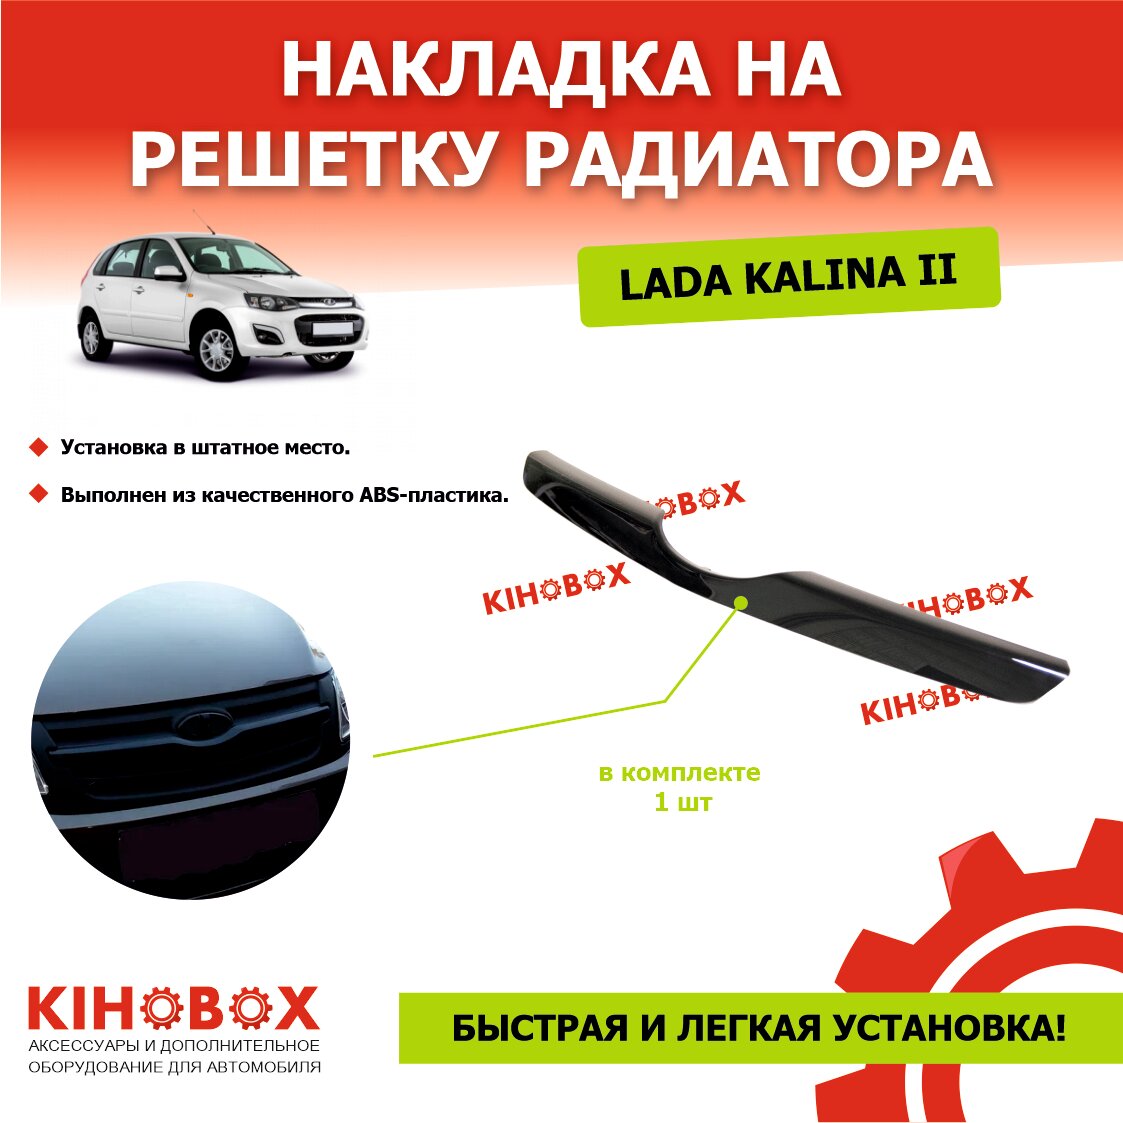 Накладка на решетку радиатора (сабля) для Лада Калина 2 все модели - KIHOBOX АРТ 5521102